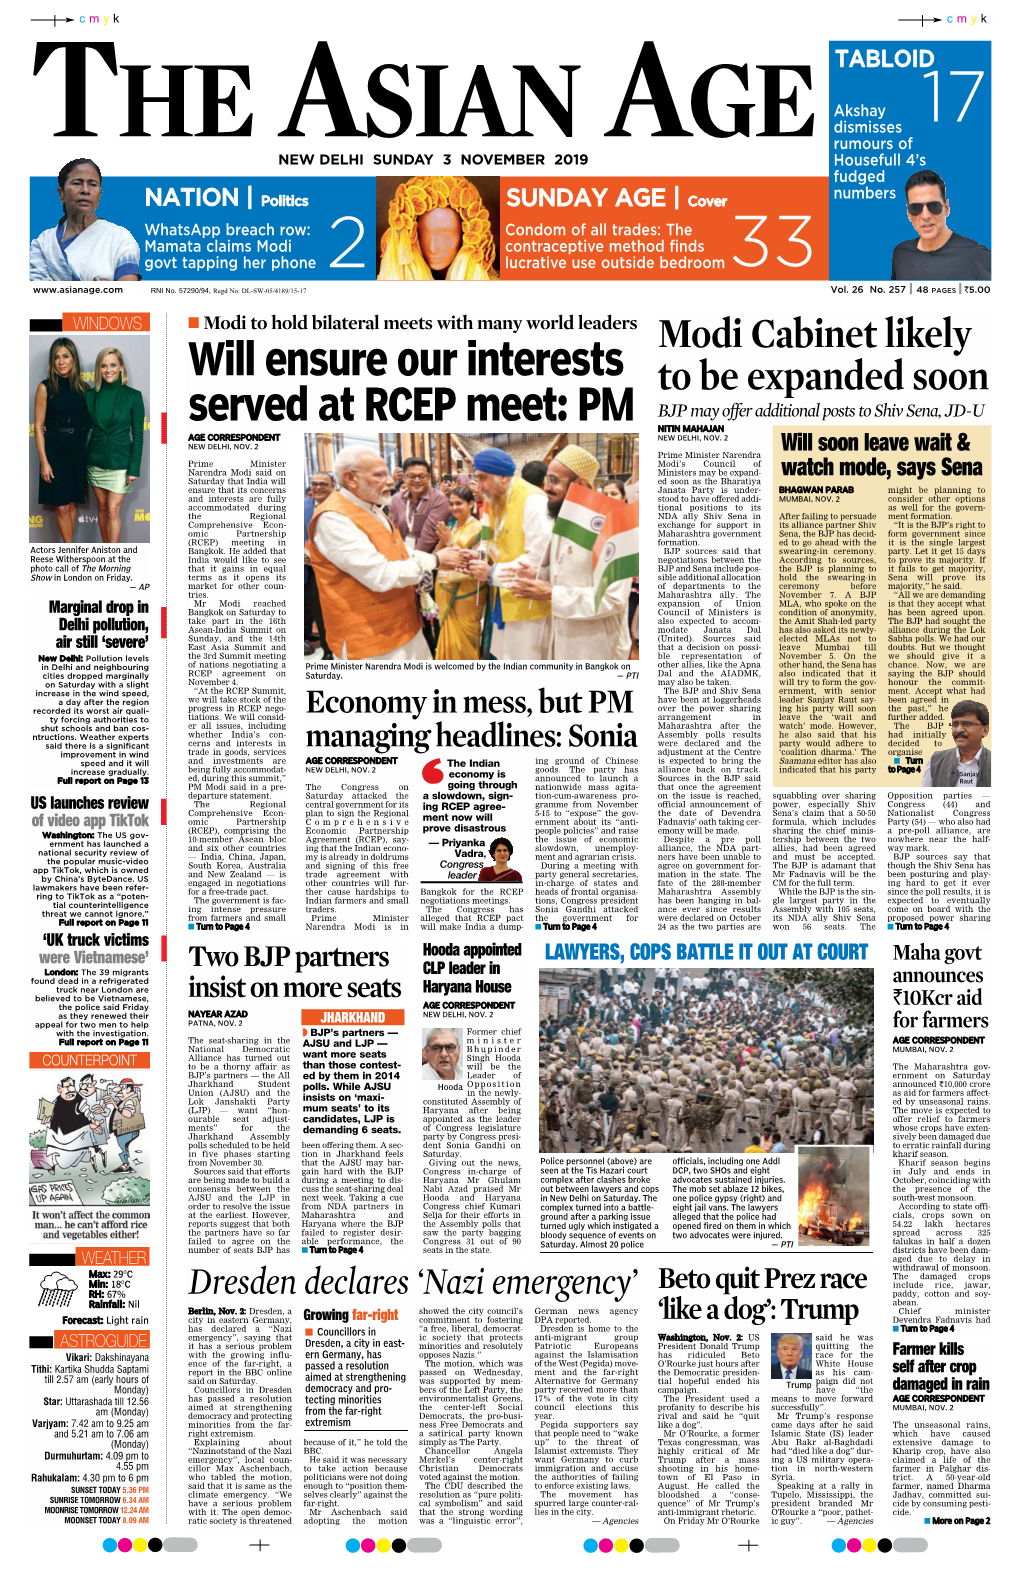 PM BJP May Offer Additional Posts to Shiv Sena, JD-U NITIN MAHAJAN AGE CORRESPONDENT NEW DELHI, NOV